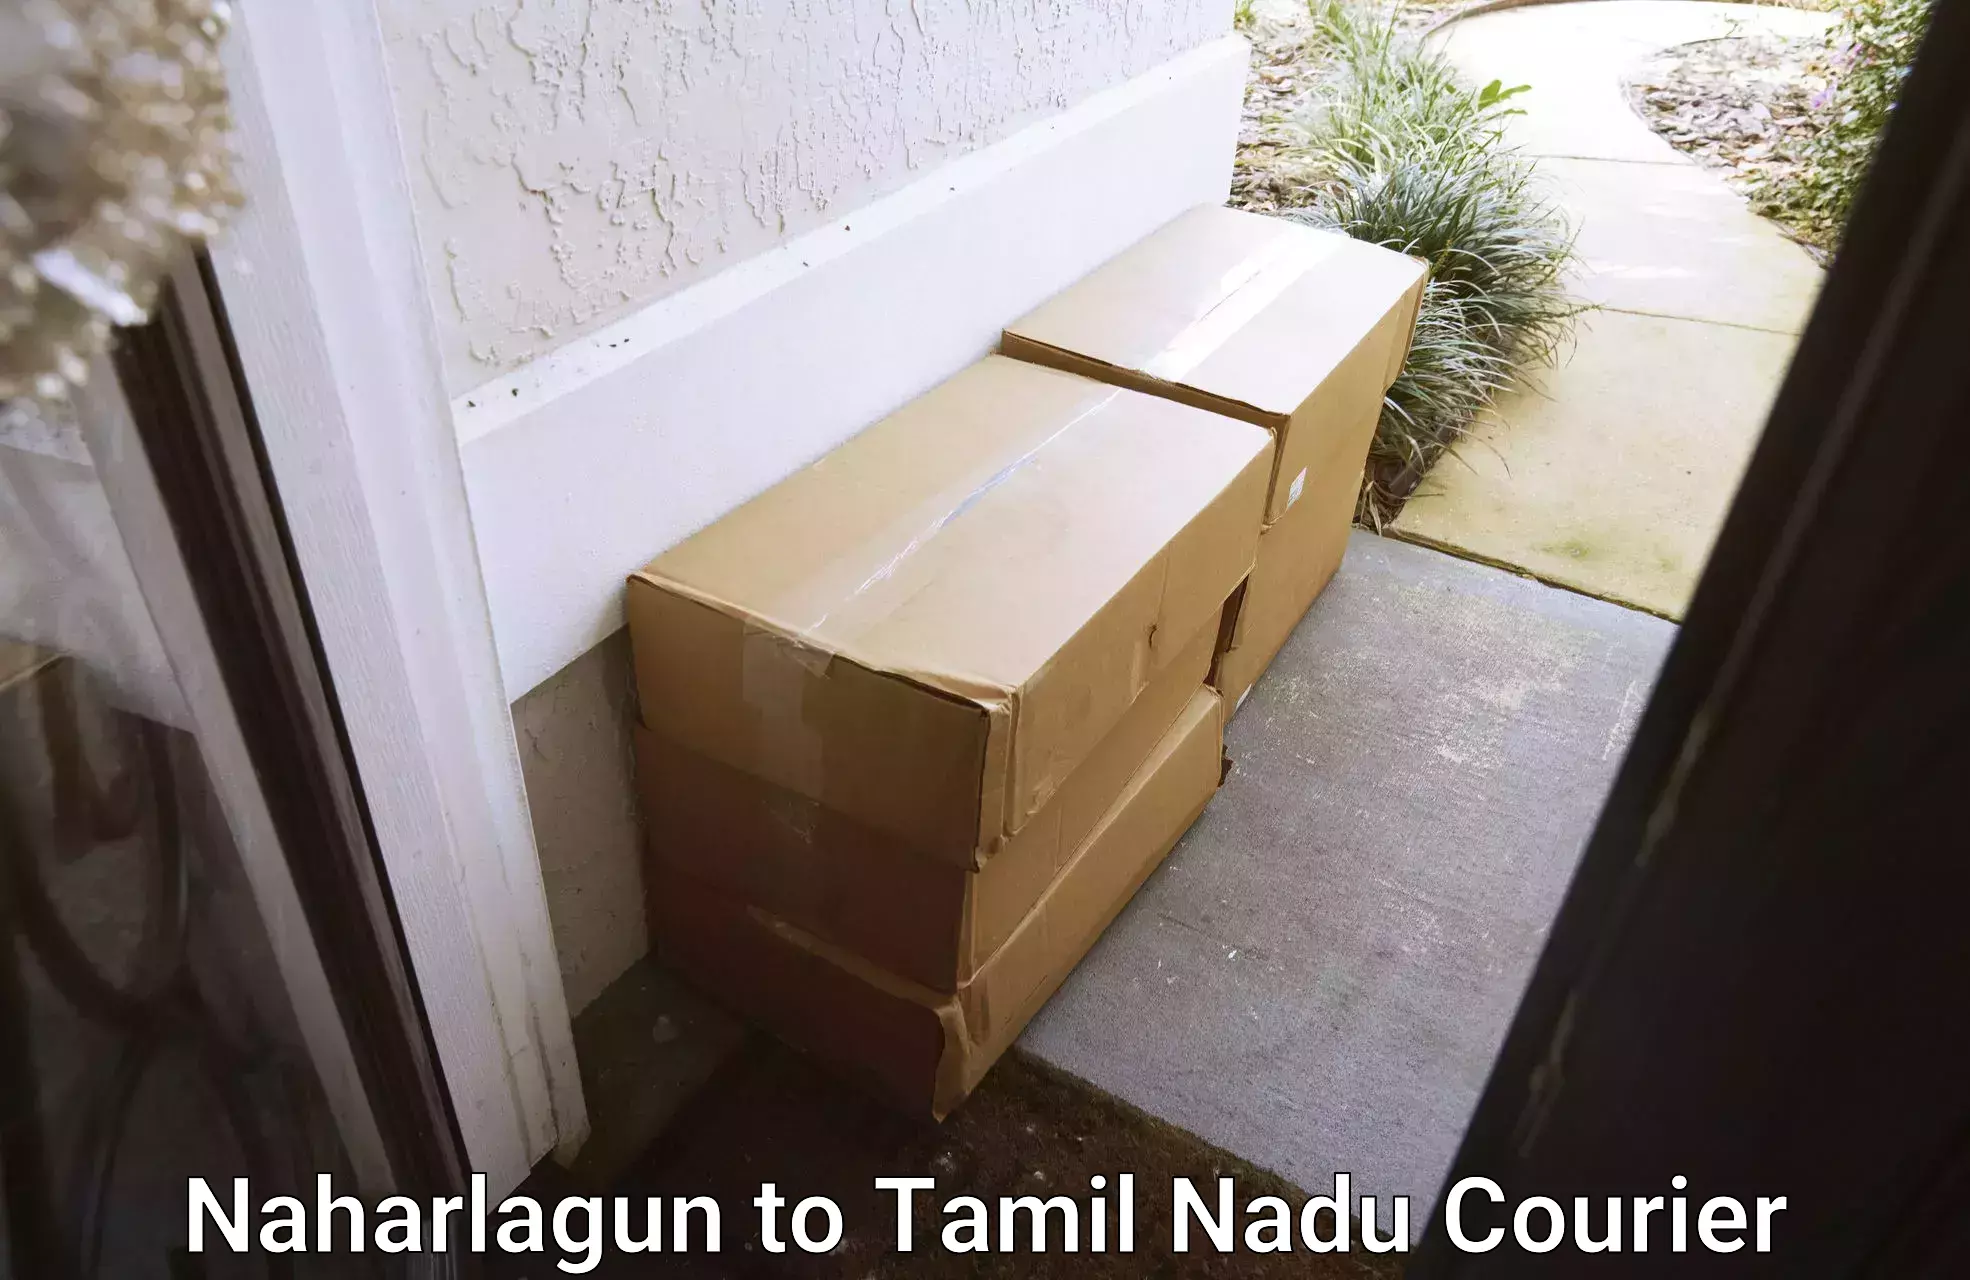 Express delivery capabilities Naharlagun to Perambalur